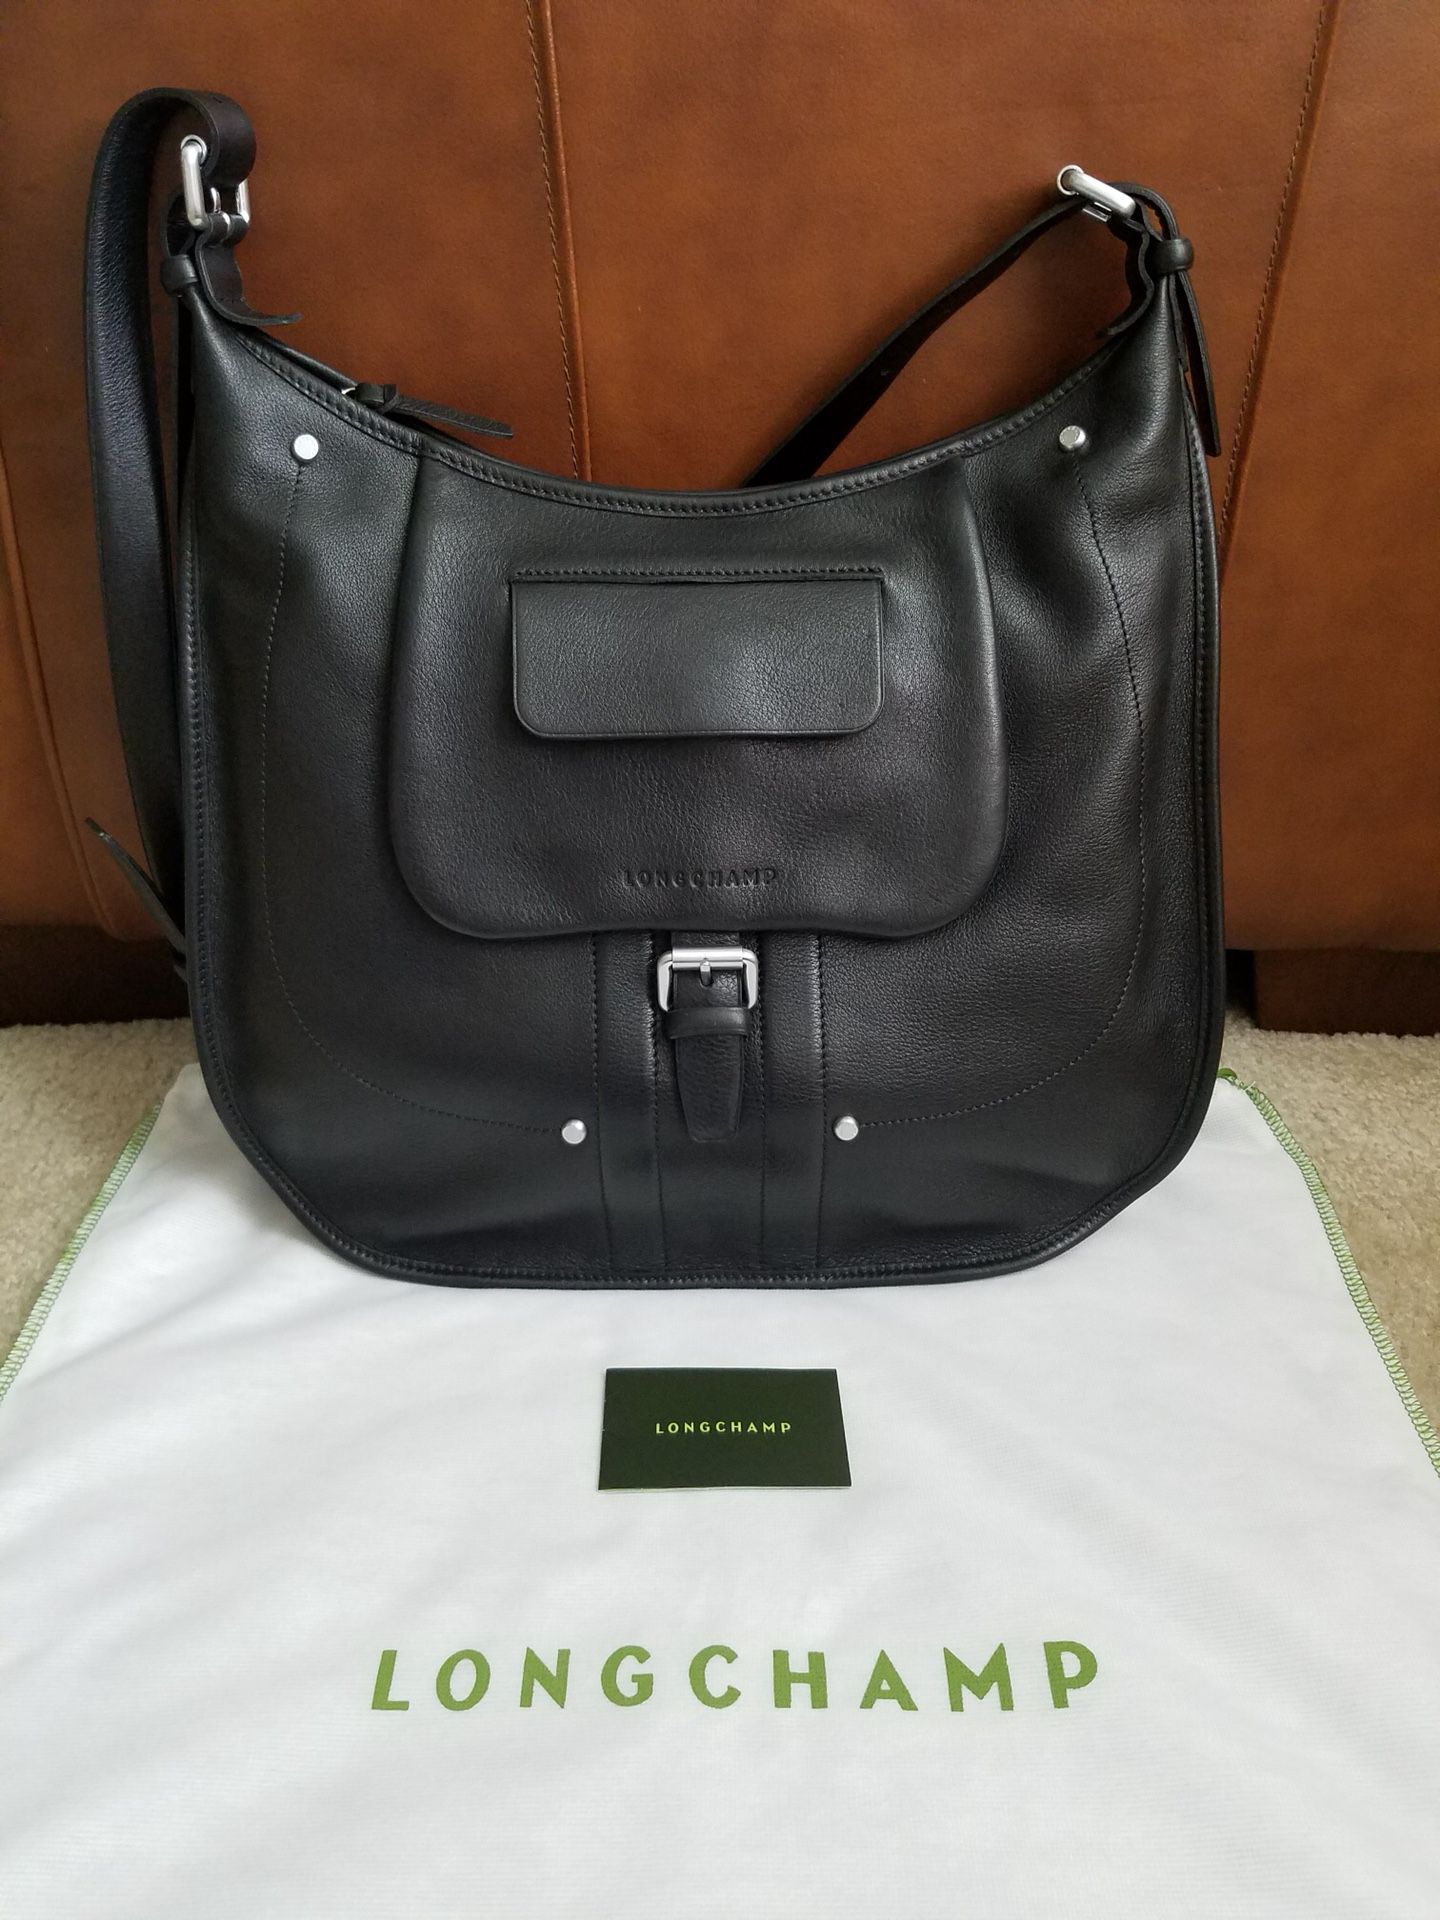 Longchamp Balzane Leather Hobo Bag for Sale in Winchester, CA